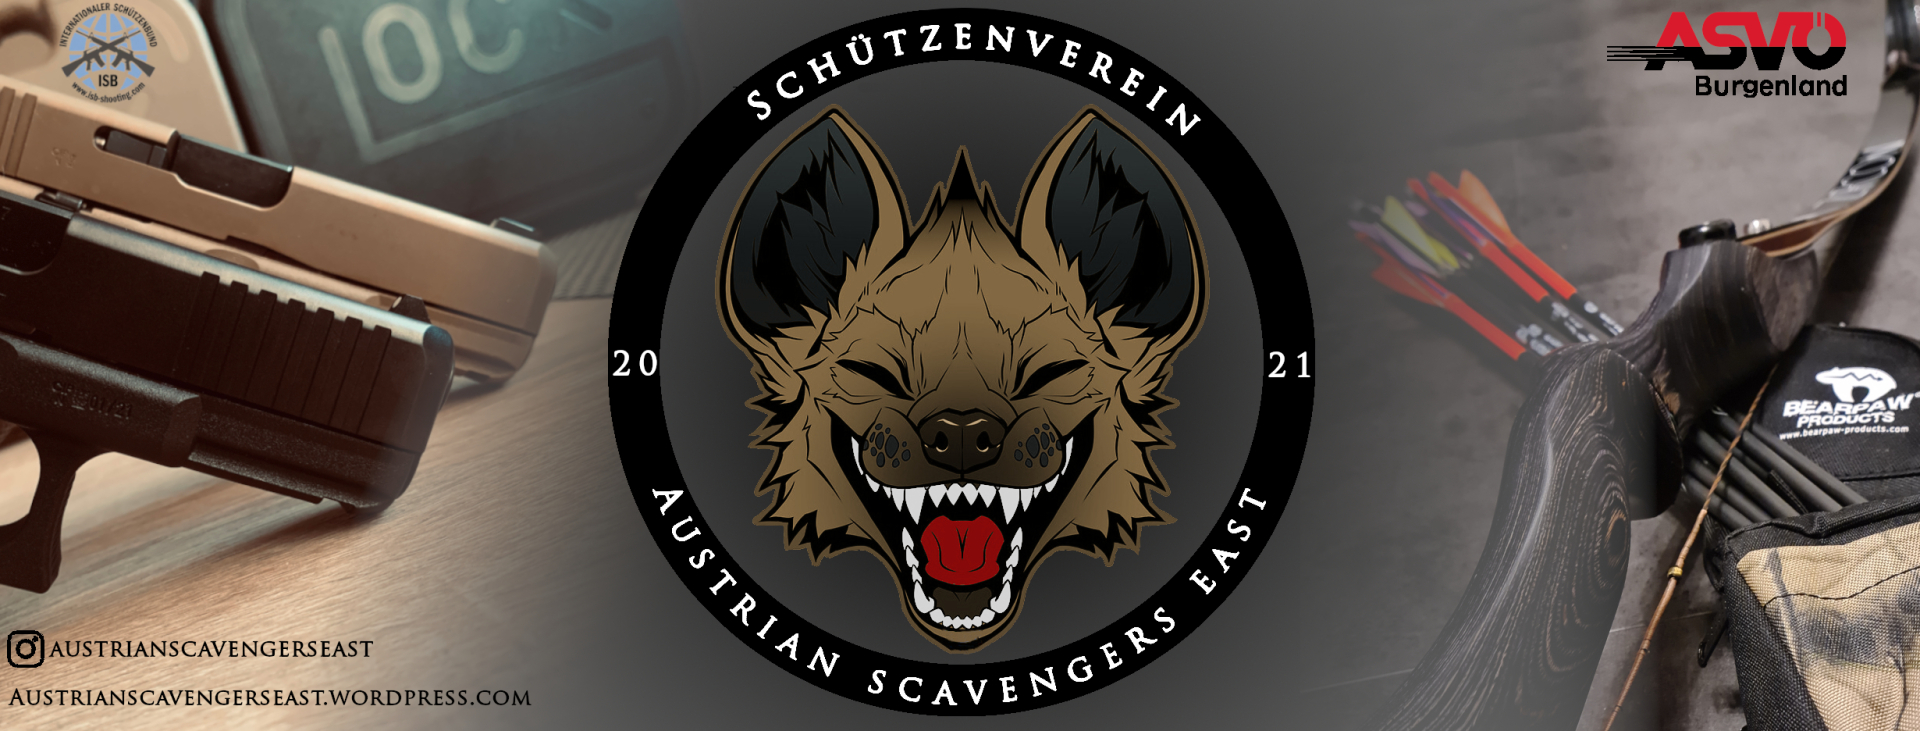 Logo Schützenverein Austria Scavengers East